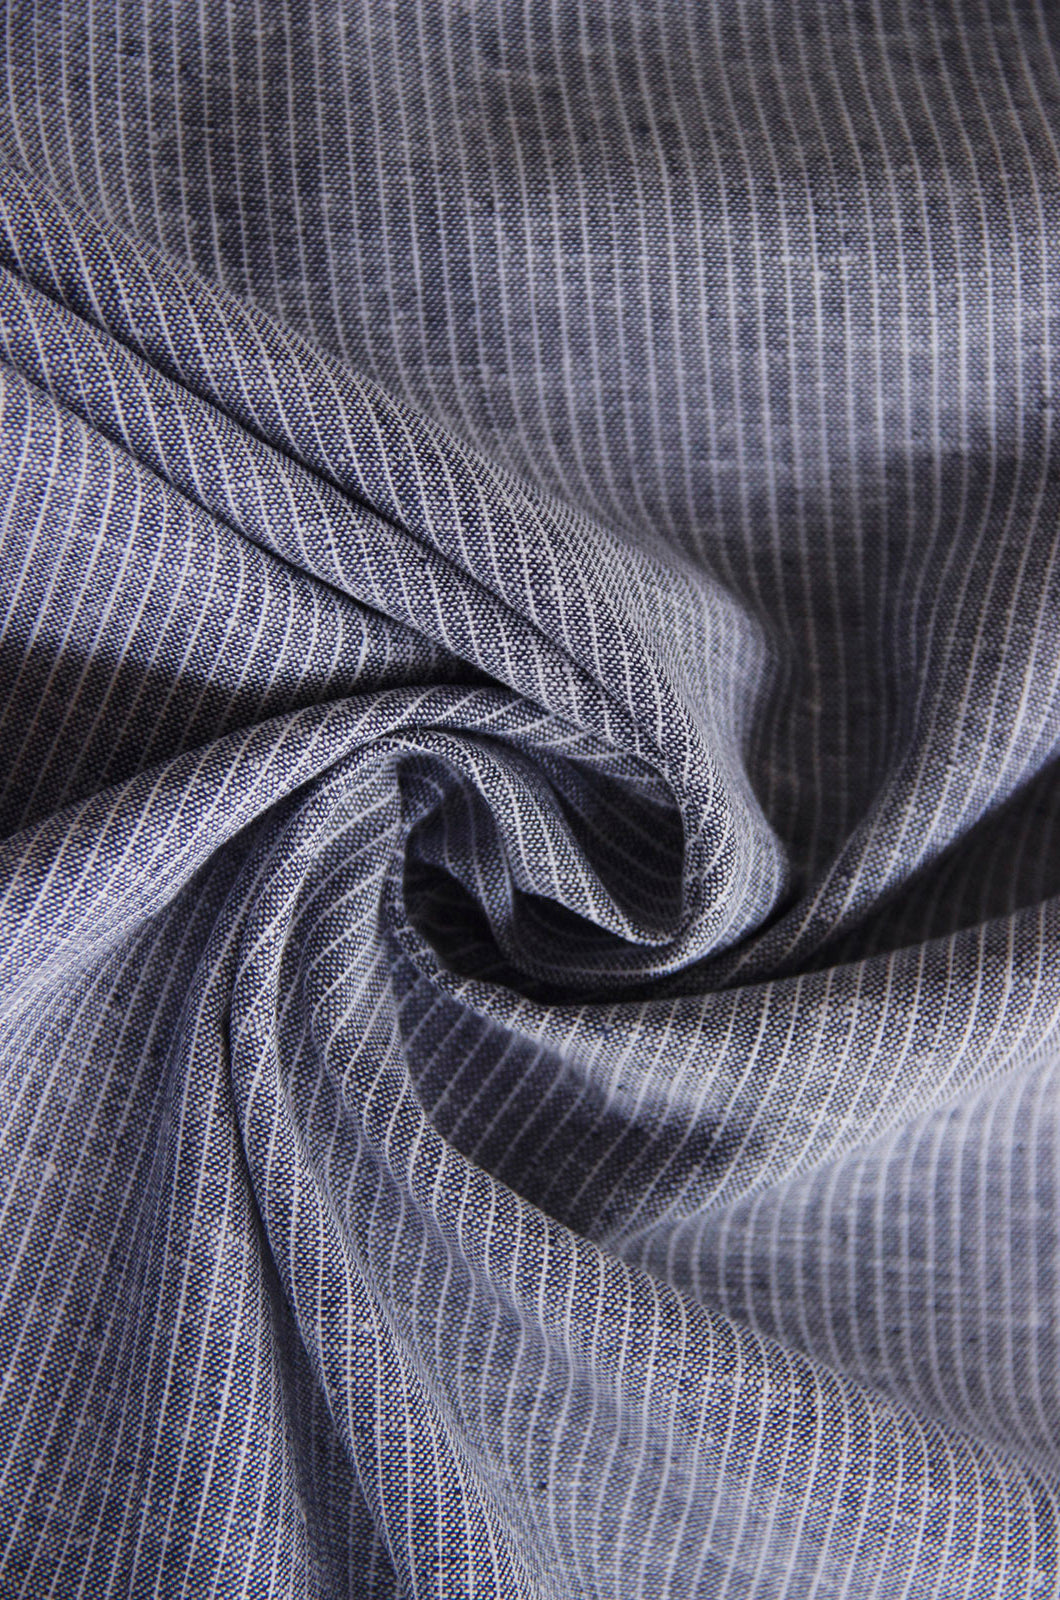 Half linen patterned fine stripes * From 50 cm